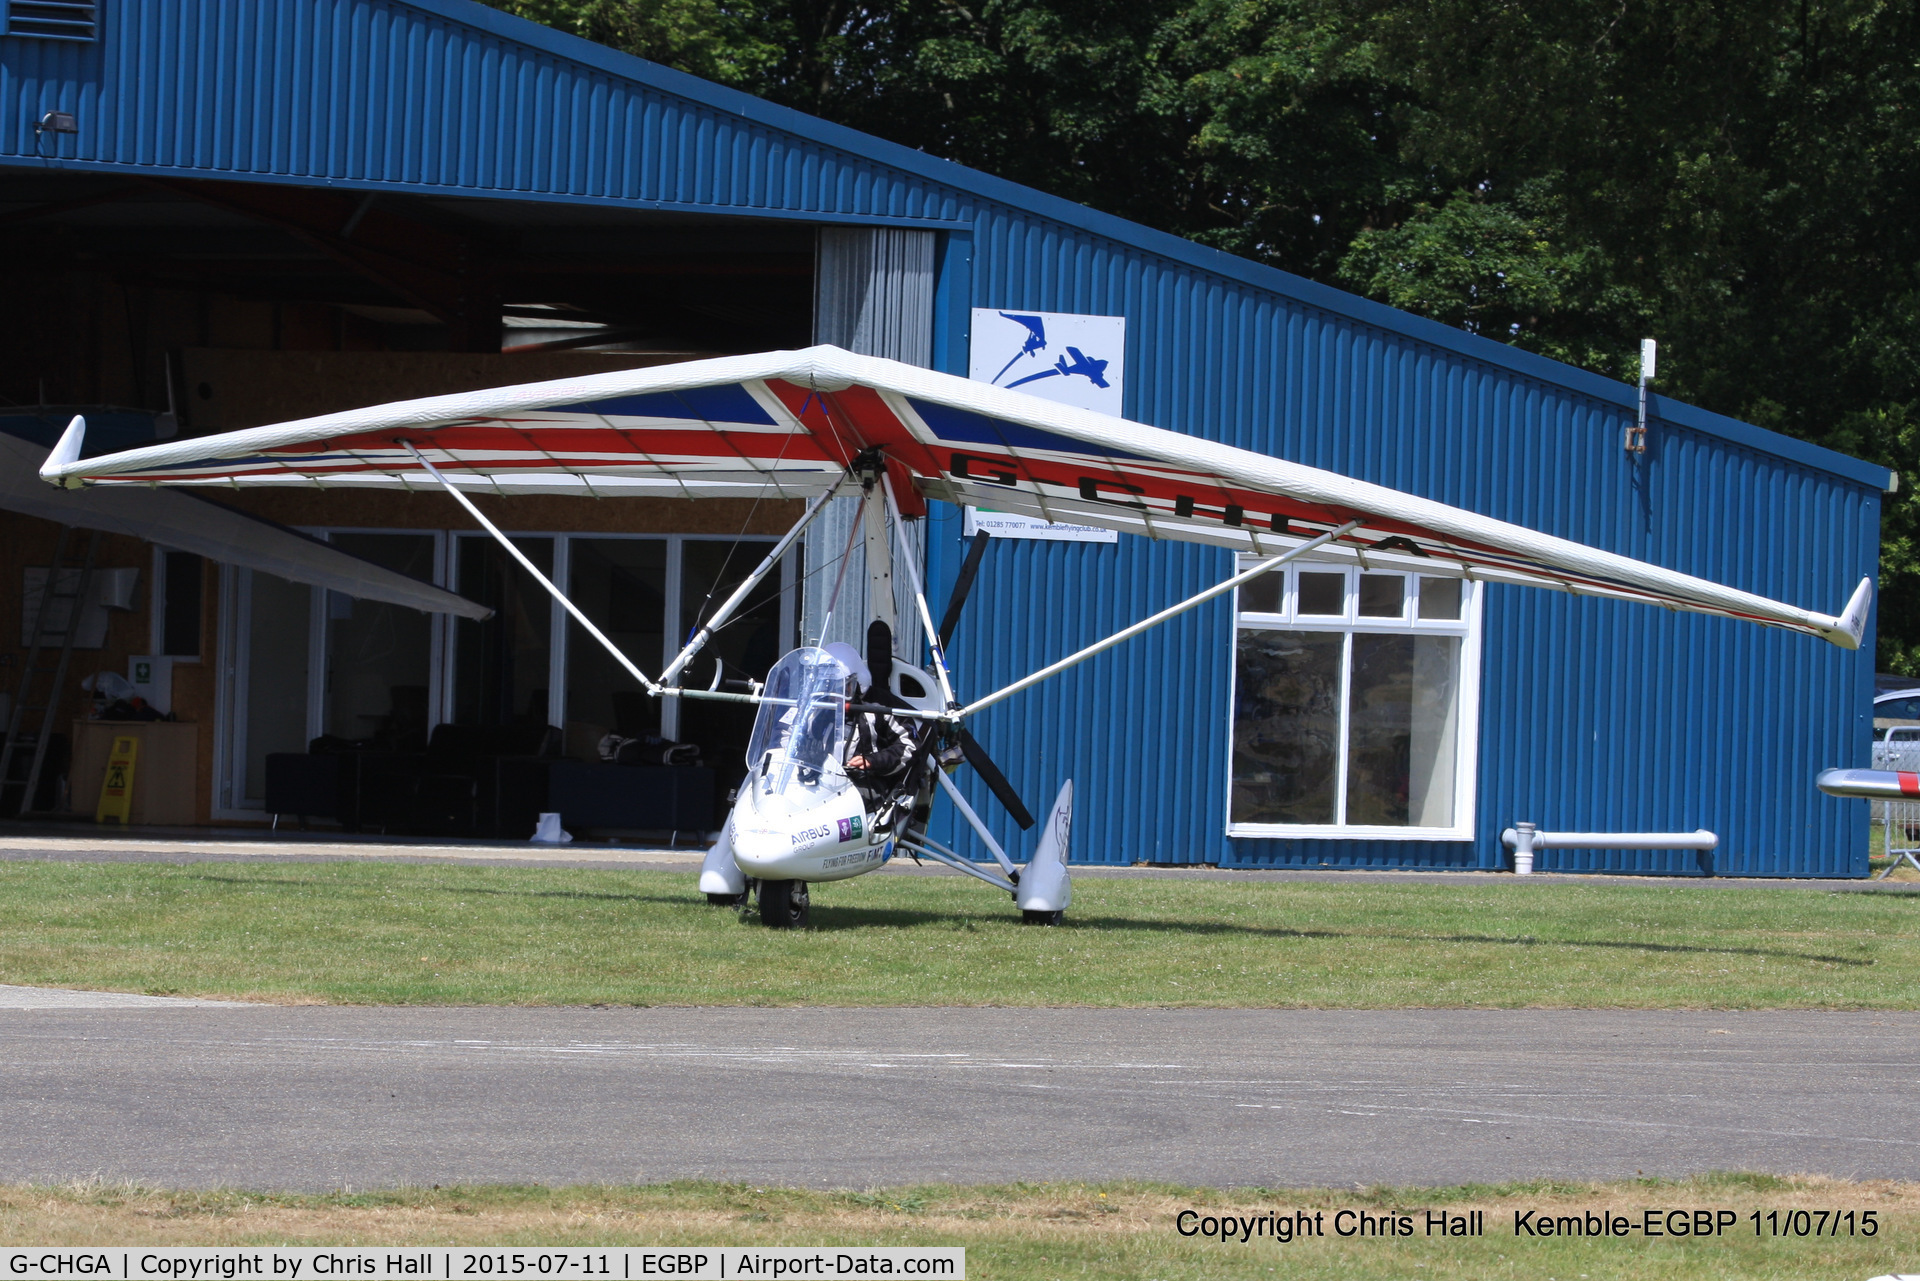 G-CHGA, 2012 P&M Aviation Quik GTR C/N 8603, Kemble resident